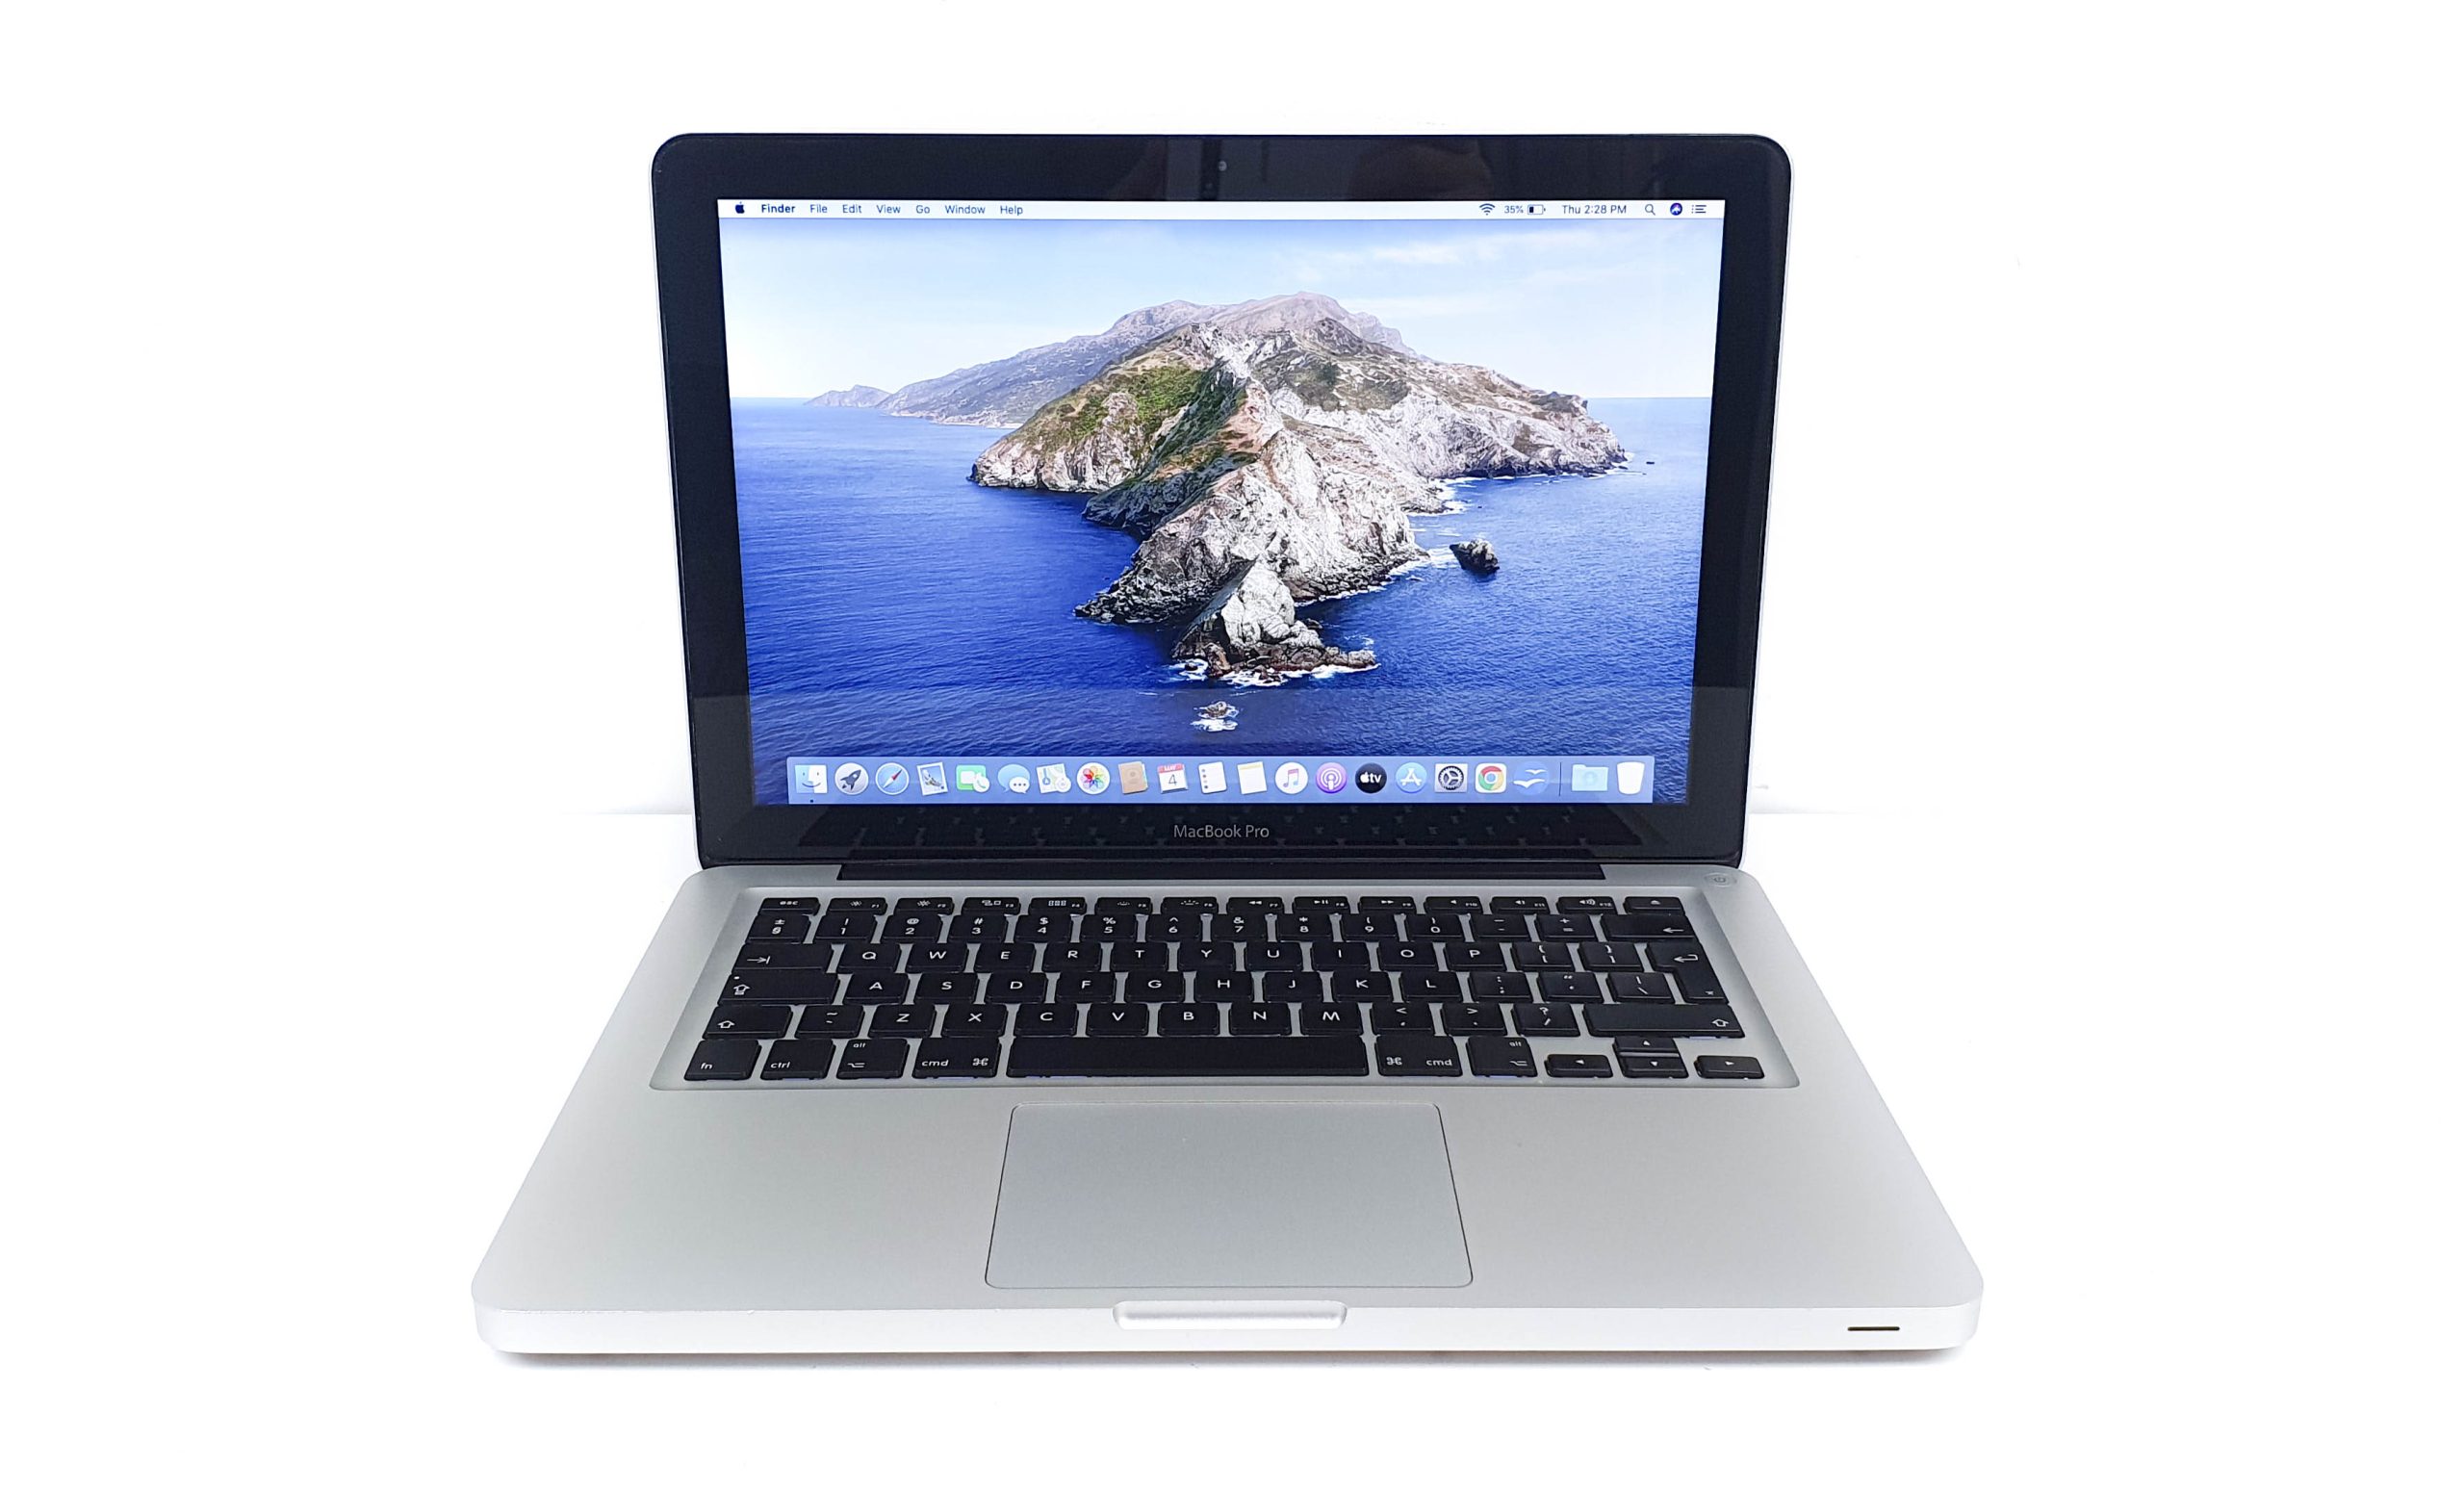 macbook Air (13-inch, Mid 2012)